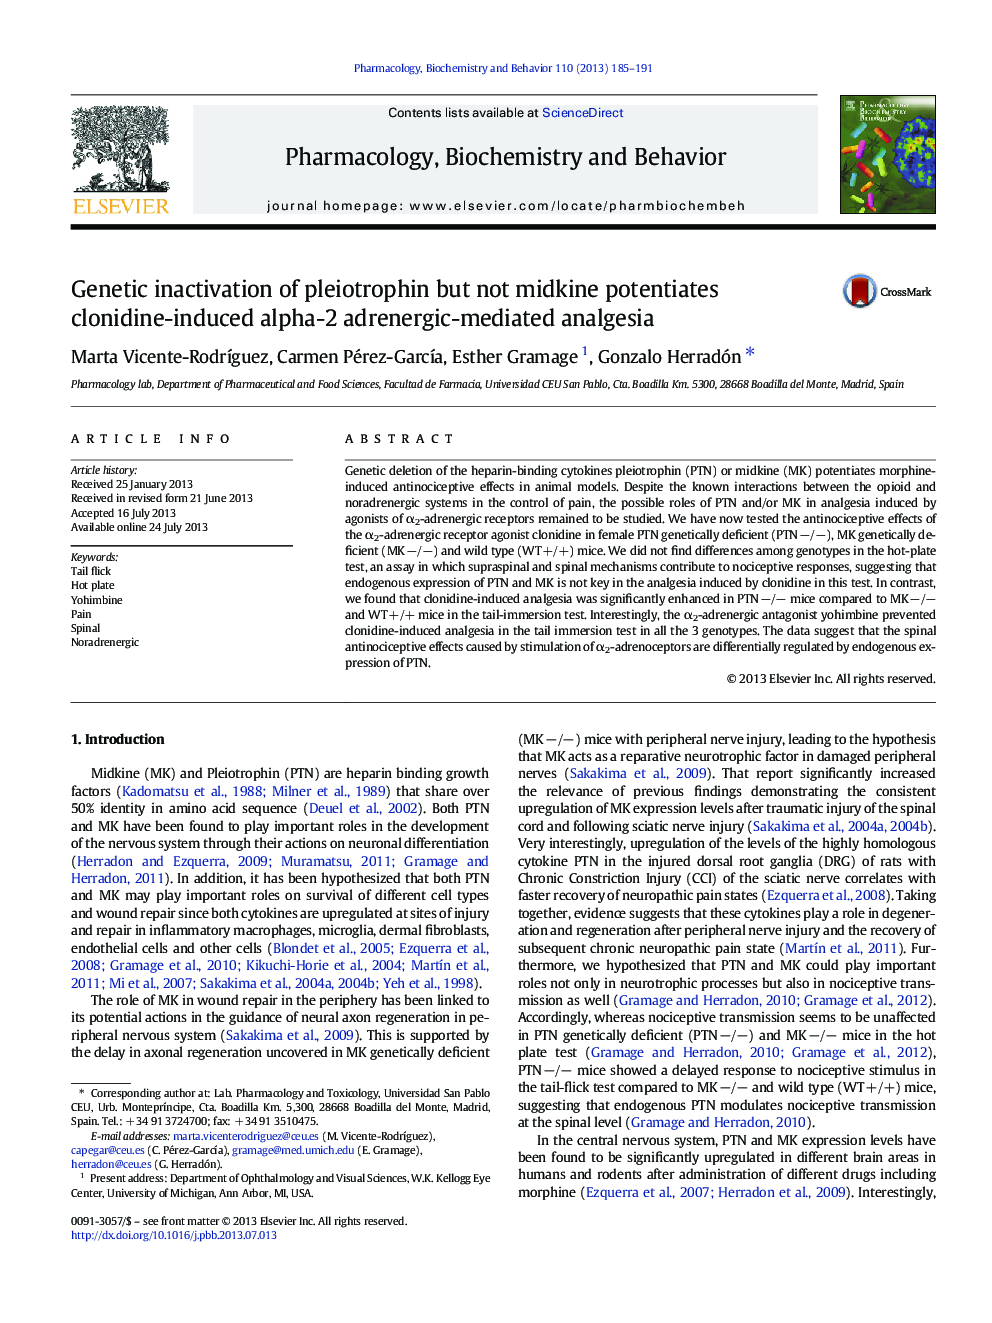 Genetic inactivation of pleiotrophin but not midkine potentiates clonidine-induced alpha-2 adrenergic-mediated analgesia